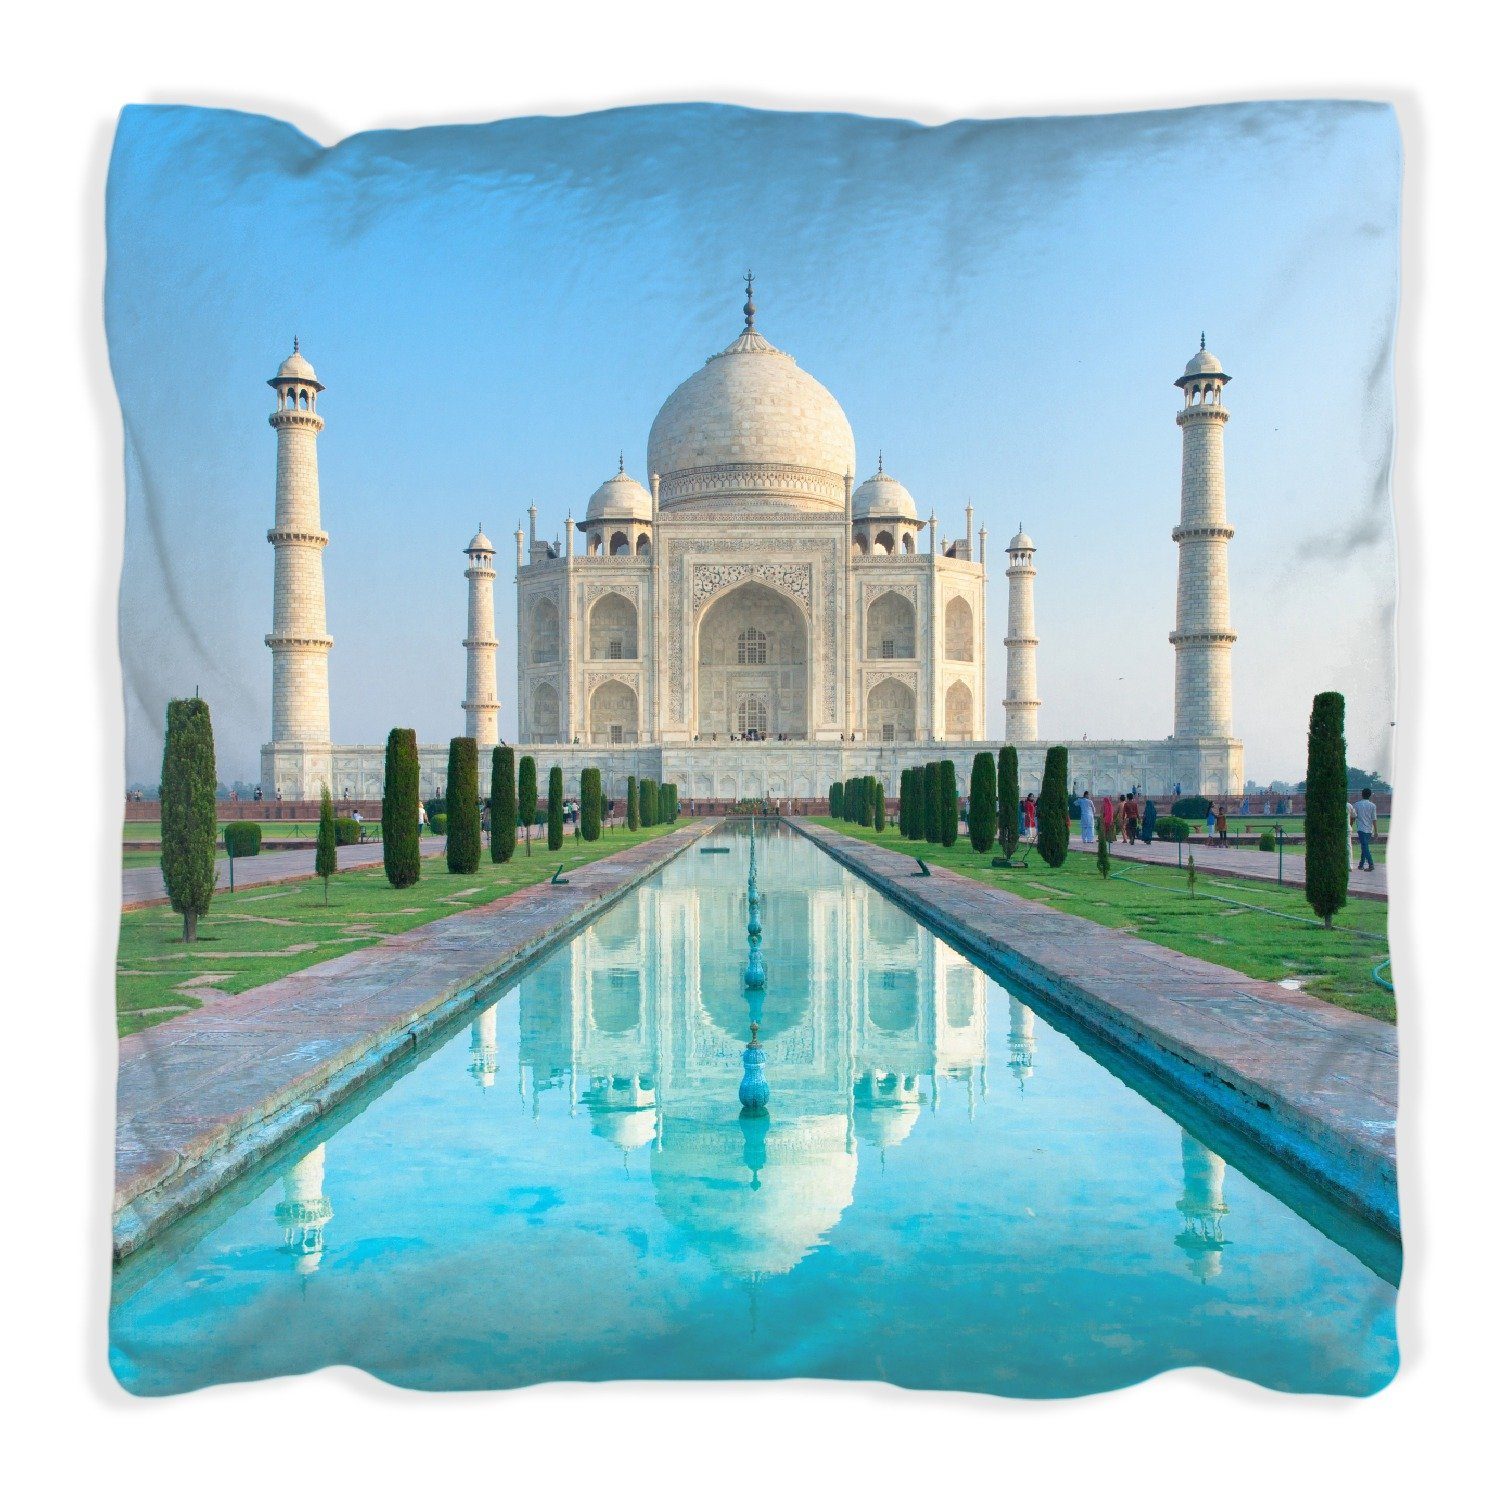 Wallario Dekokissen Taj Mahal - Mausoleum in Indien, handgenäht